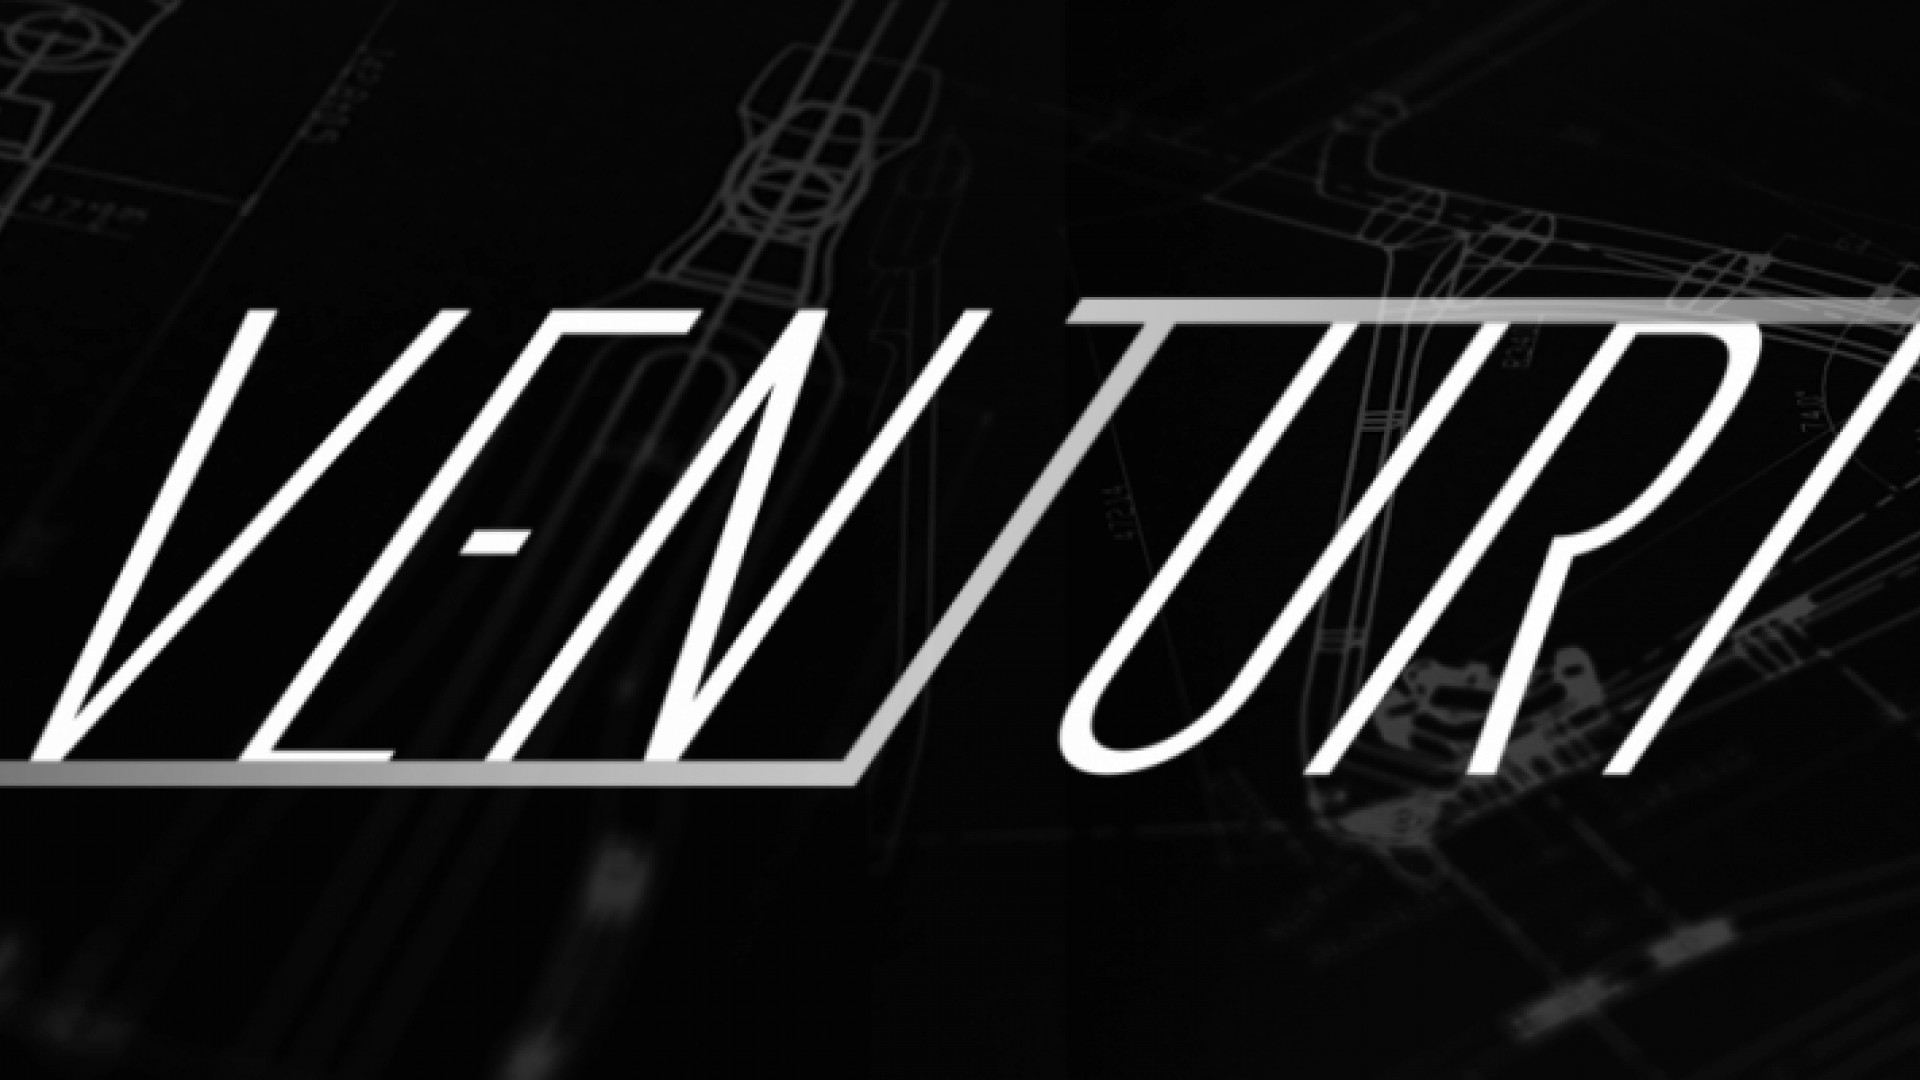 White Venturi logo on a black backdrop